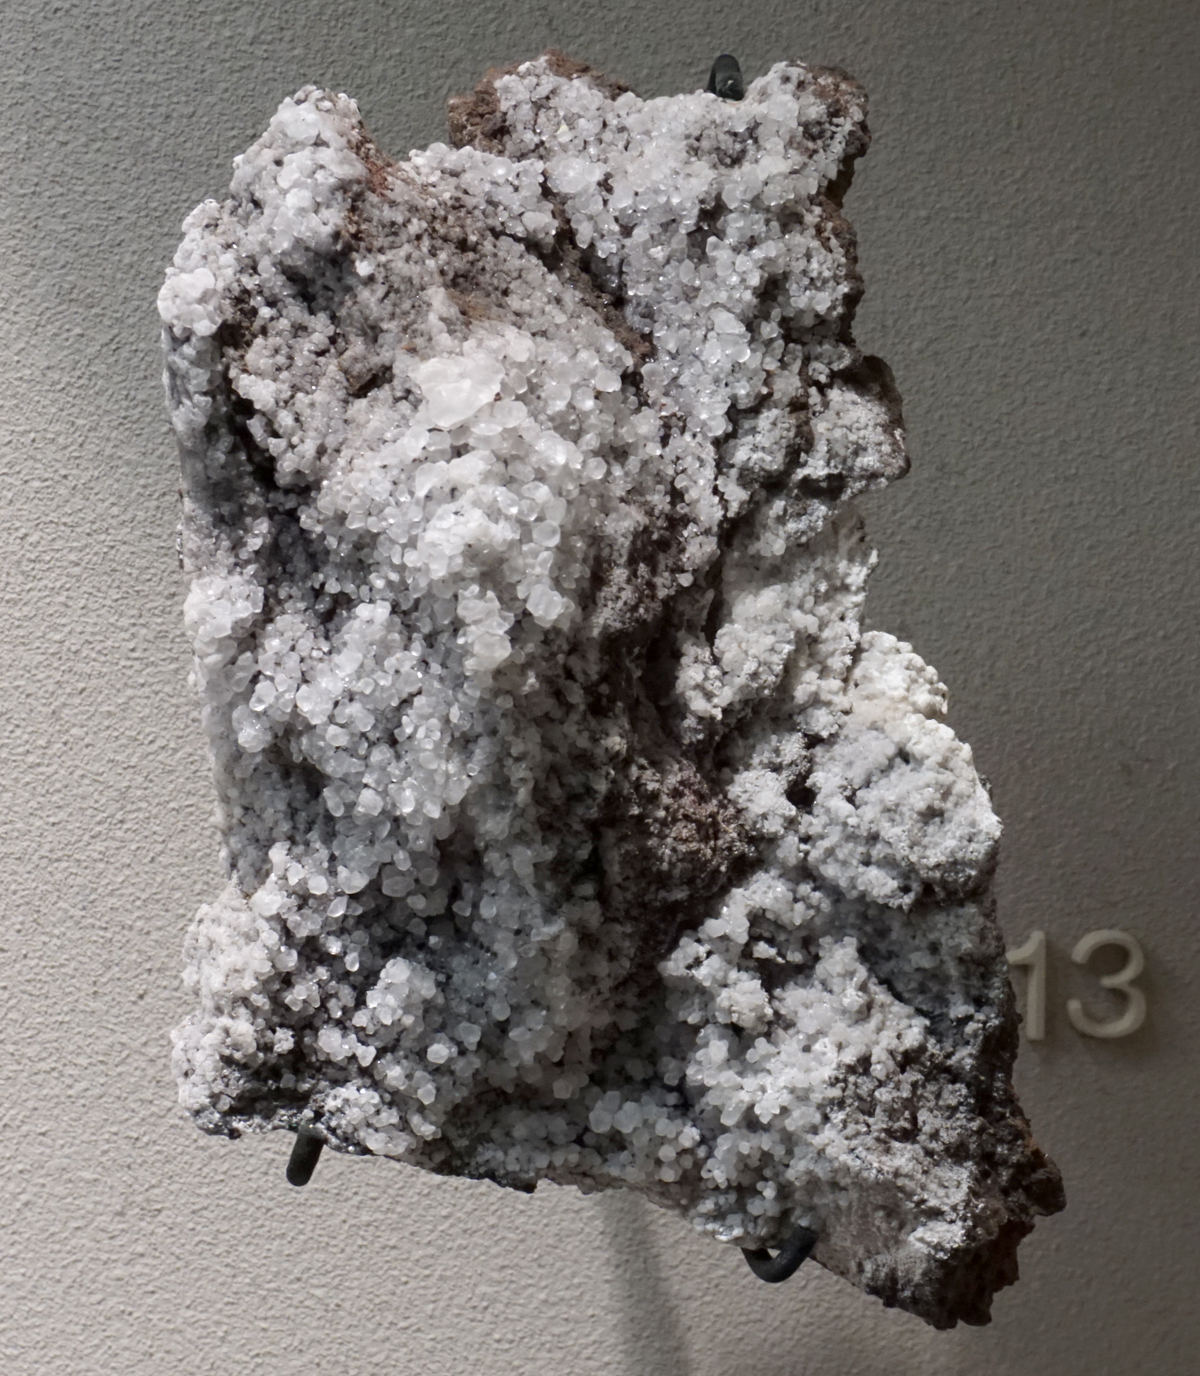 Colorless Sal Ammoniac Crystals from Paricutin Volcano, Michoacan, Mexico